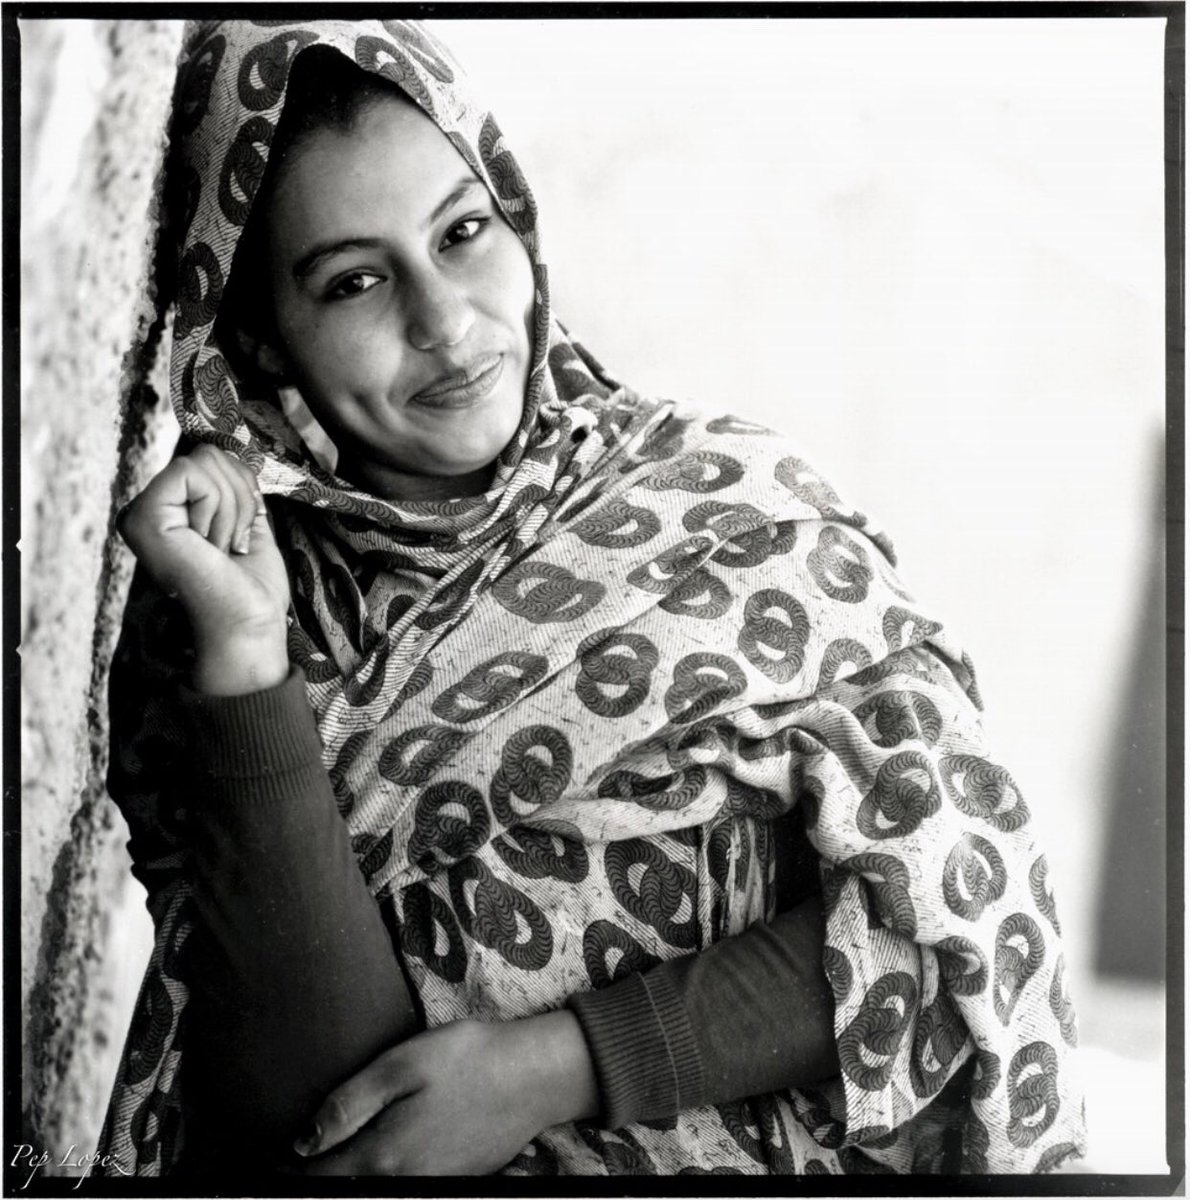 #reimaginetheworld
Hasselblad 500 C/M
Tindouf, Sahara
Analogue photo, no digital retouch.